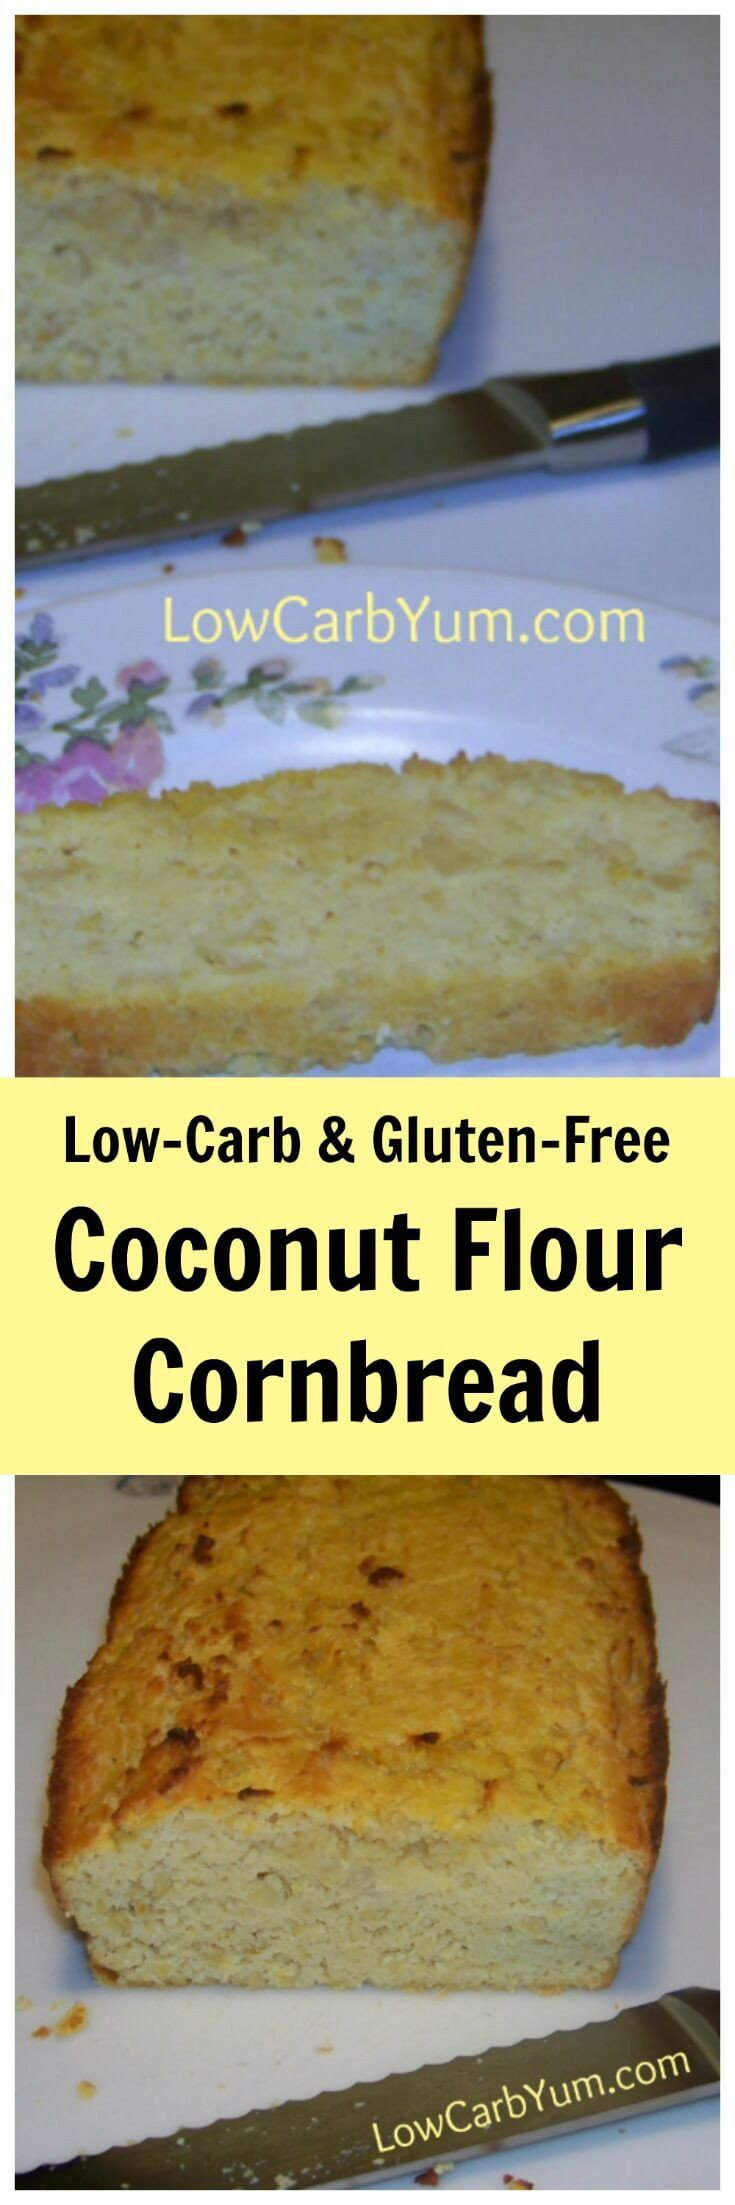 Keto Cornbread Coconut Flour
 This coconut flour cornbread is made with baby corn which